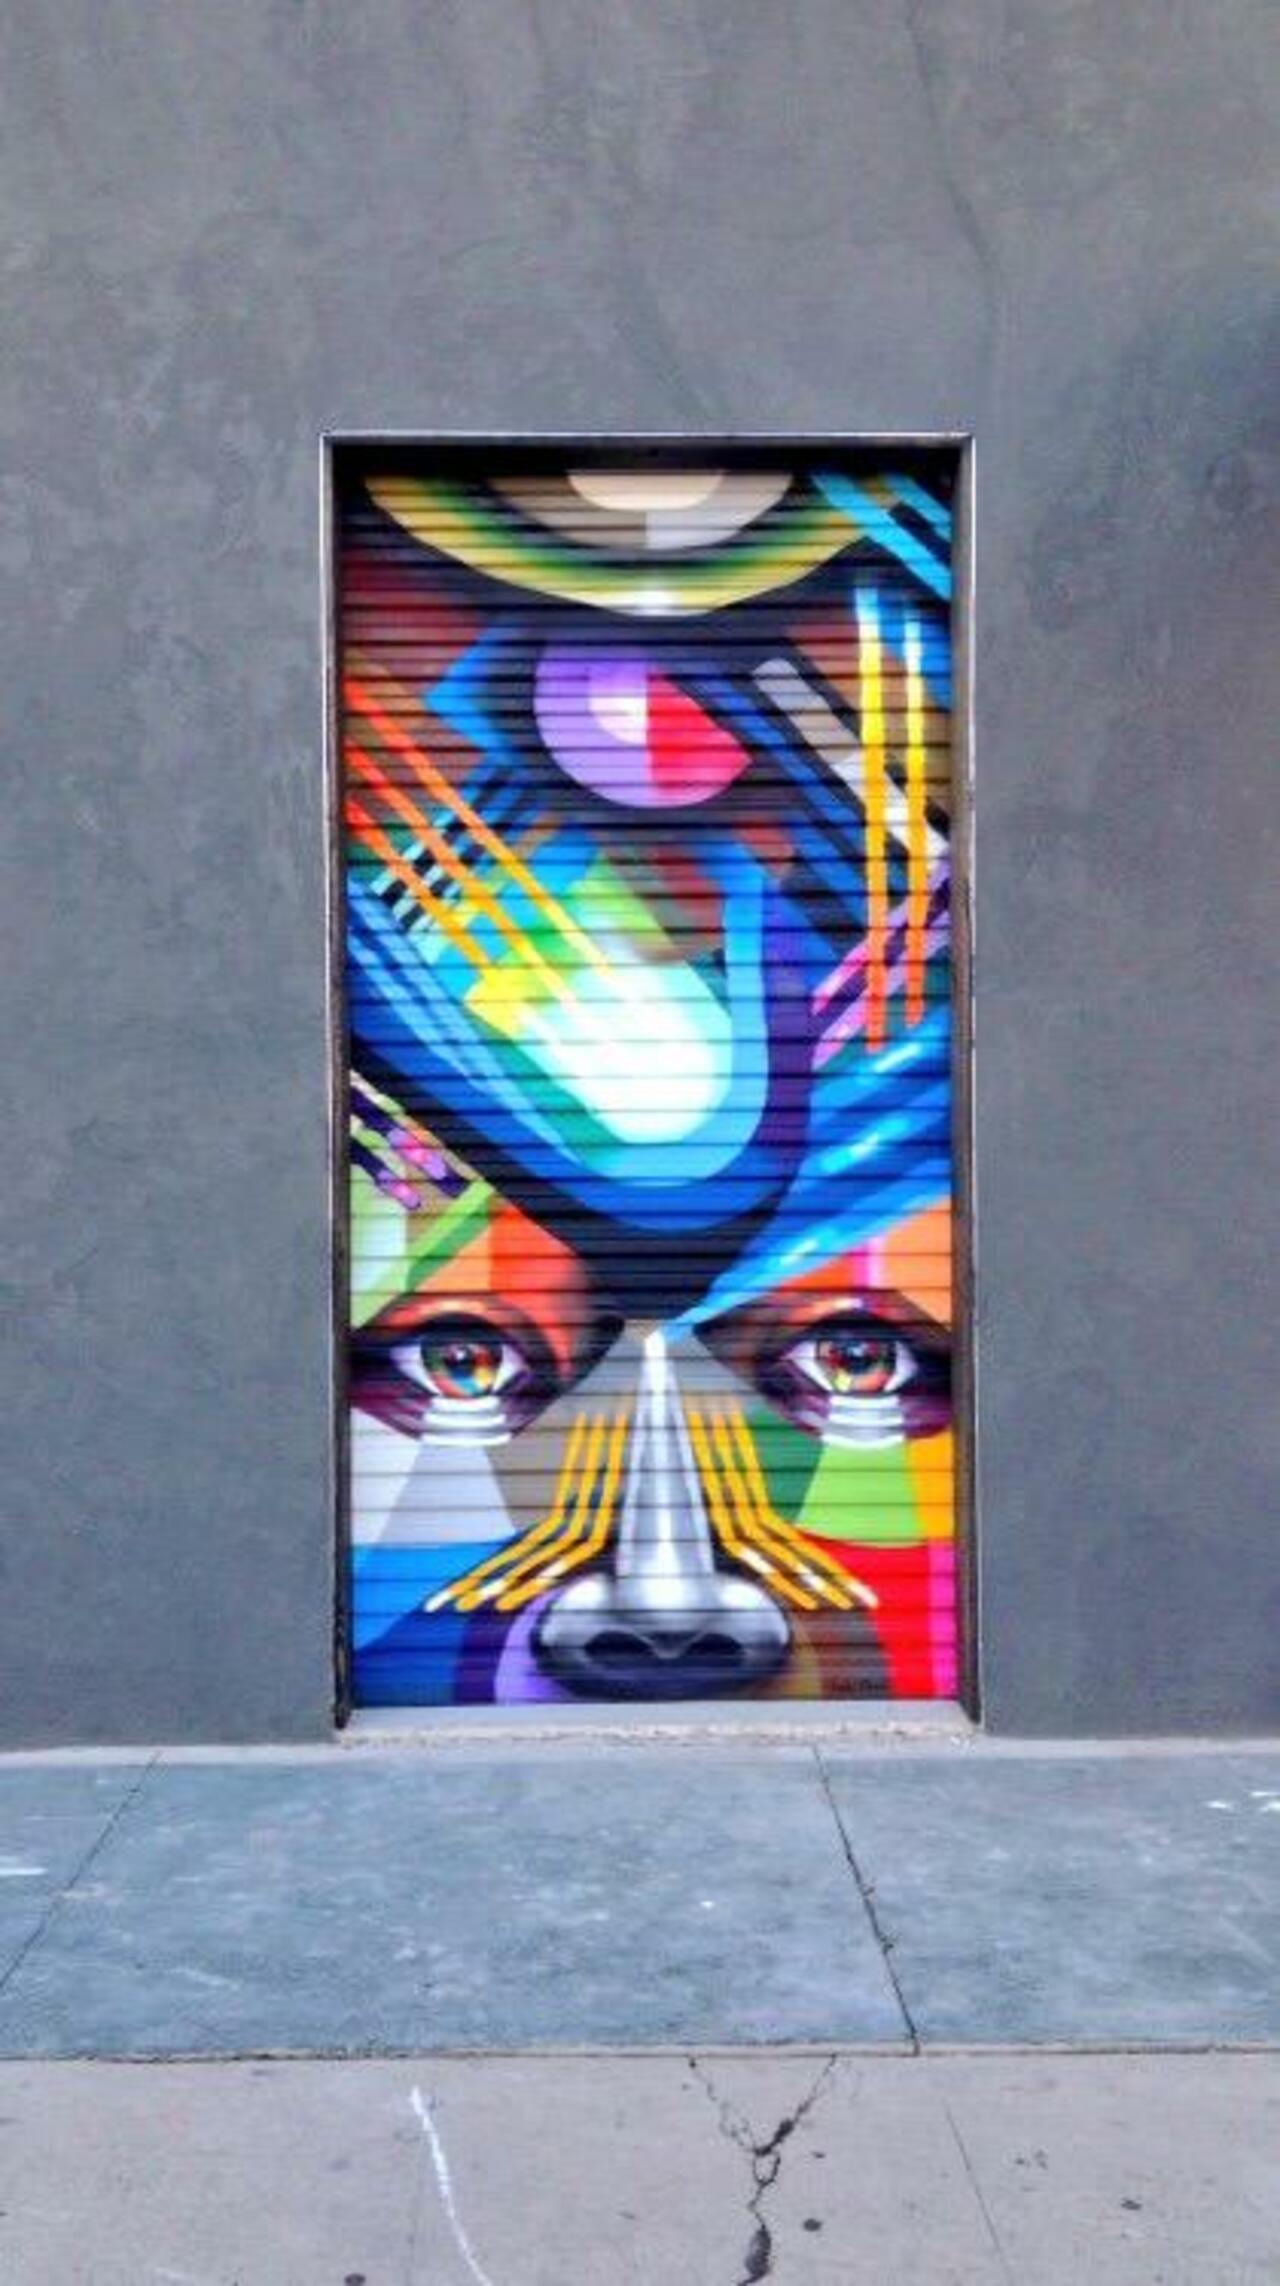 RT @maype7: Isaias Crow 
North Park (San Diego)
#streetart #art #Graffiti http://t.co/rcHSNjdn2B